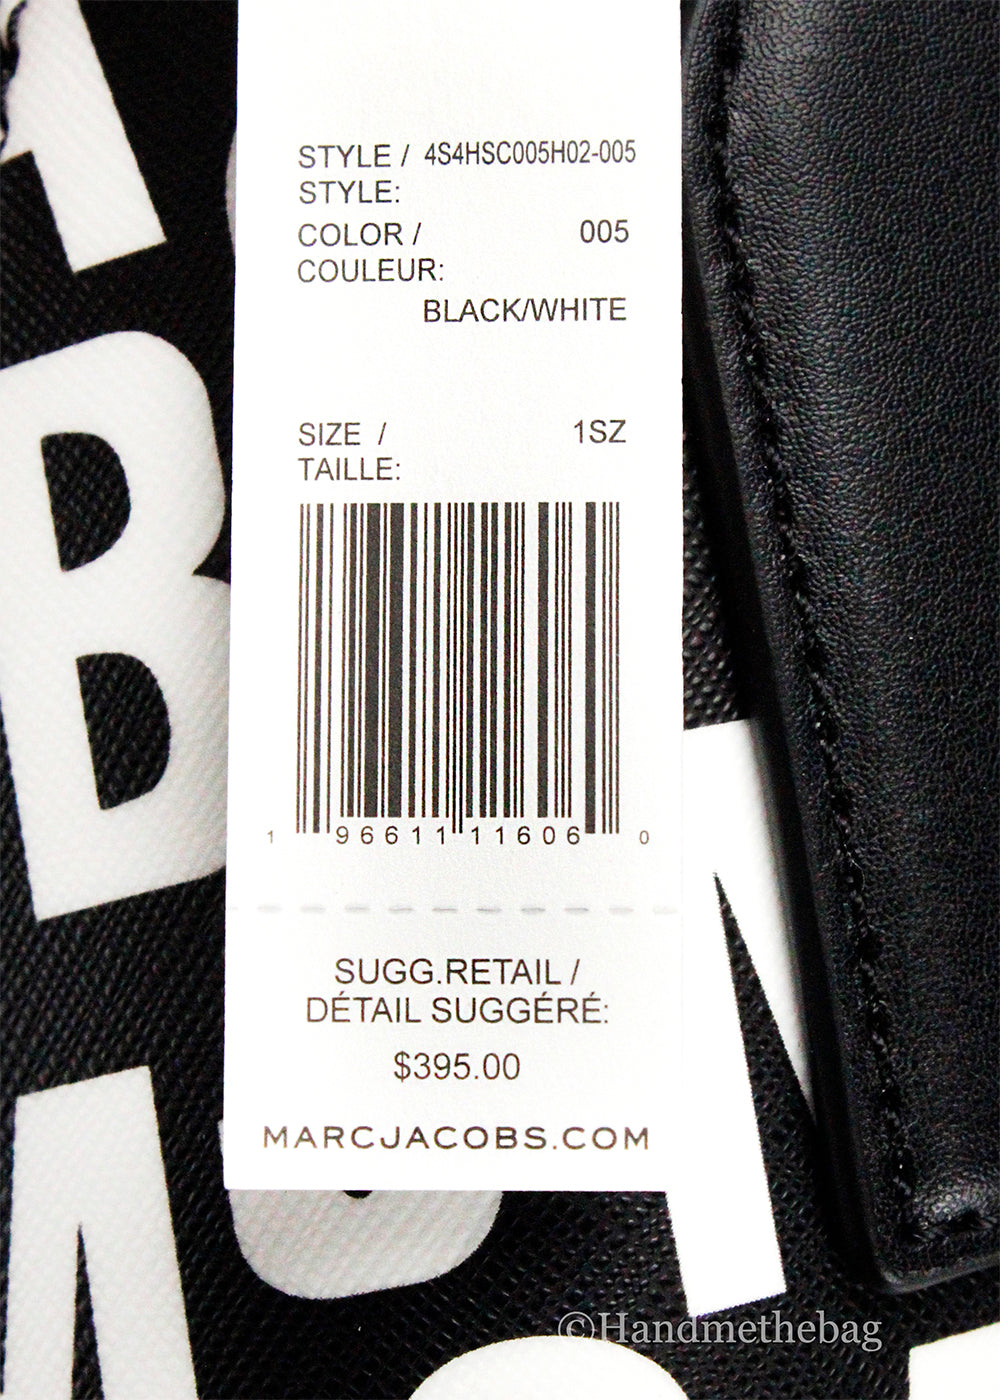 Marc Jacobs Small Monogram Leather Dome Satchel Crossbody Bag